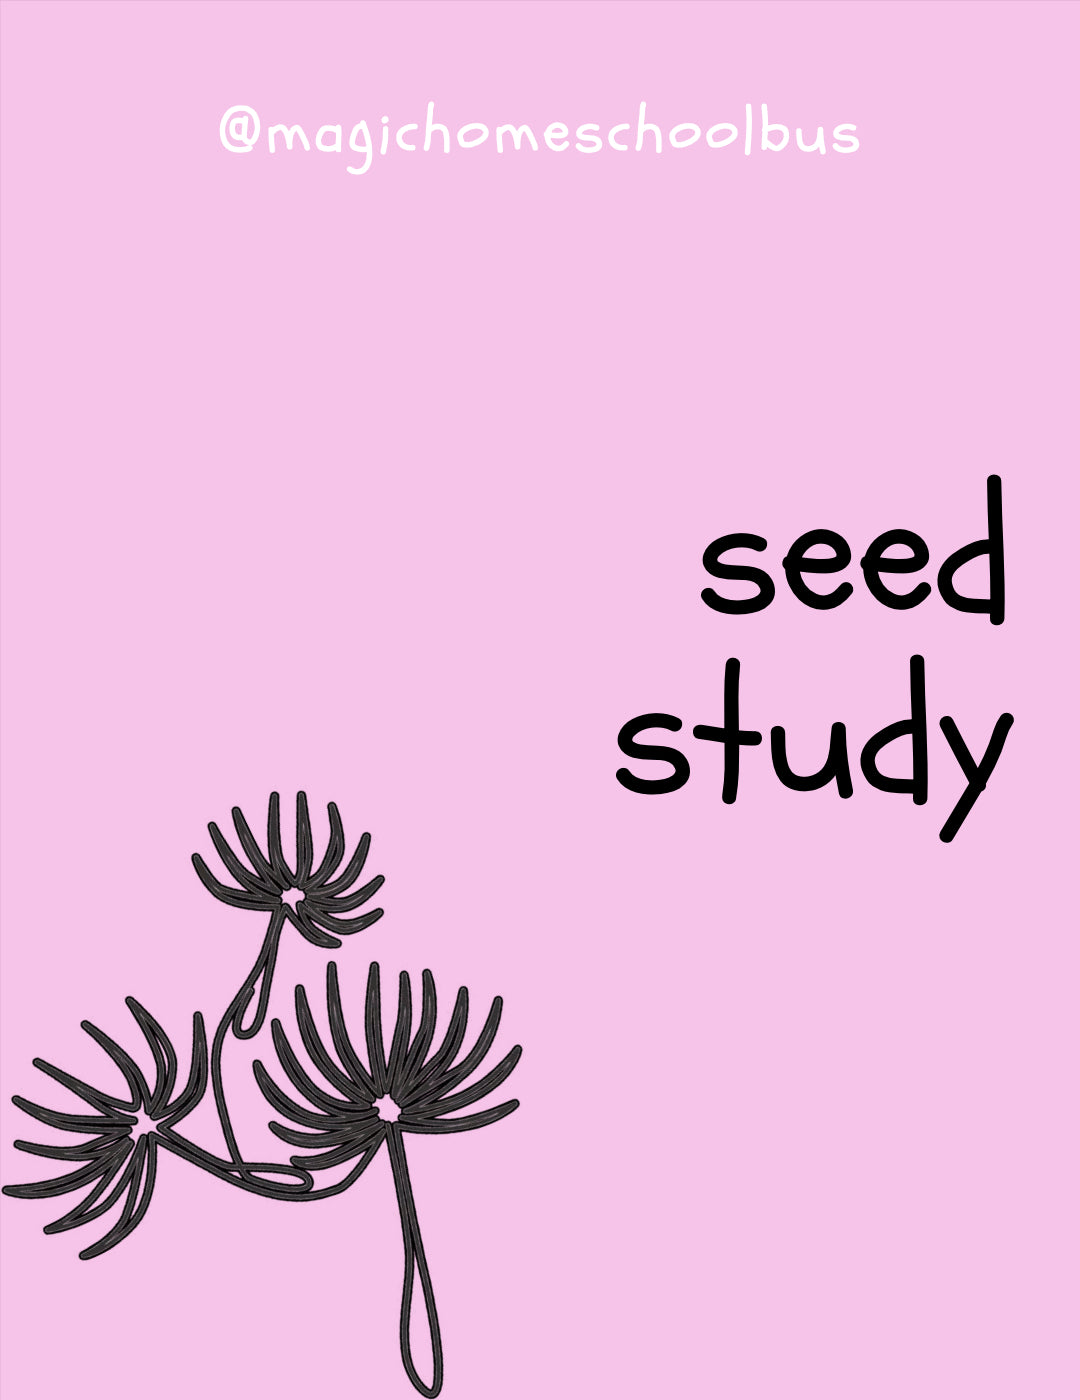 Magic Homeschool Bus - Seed Study